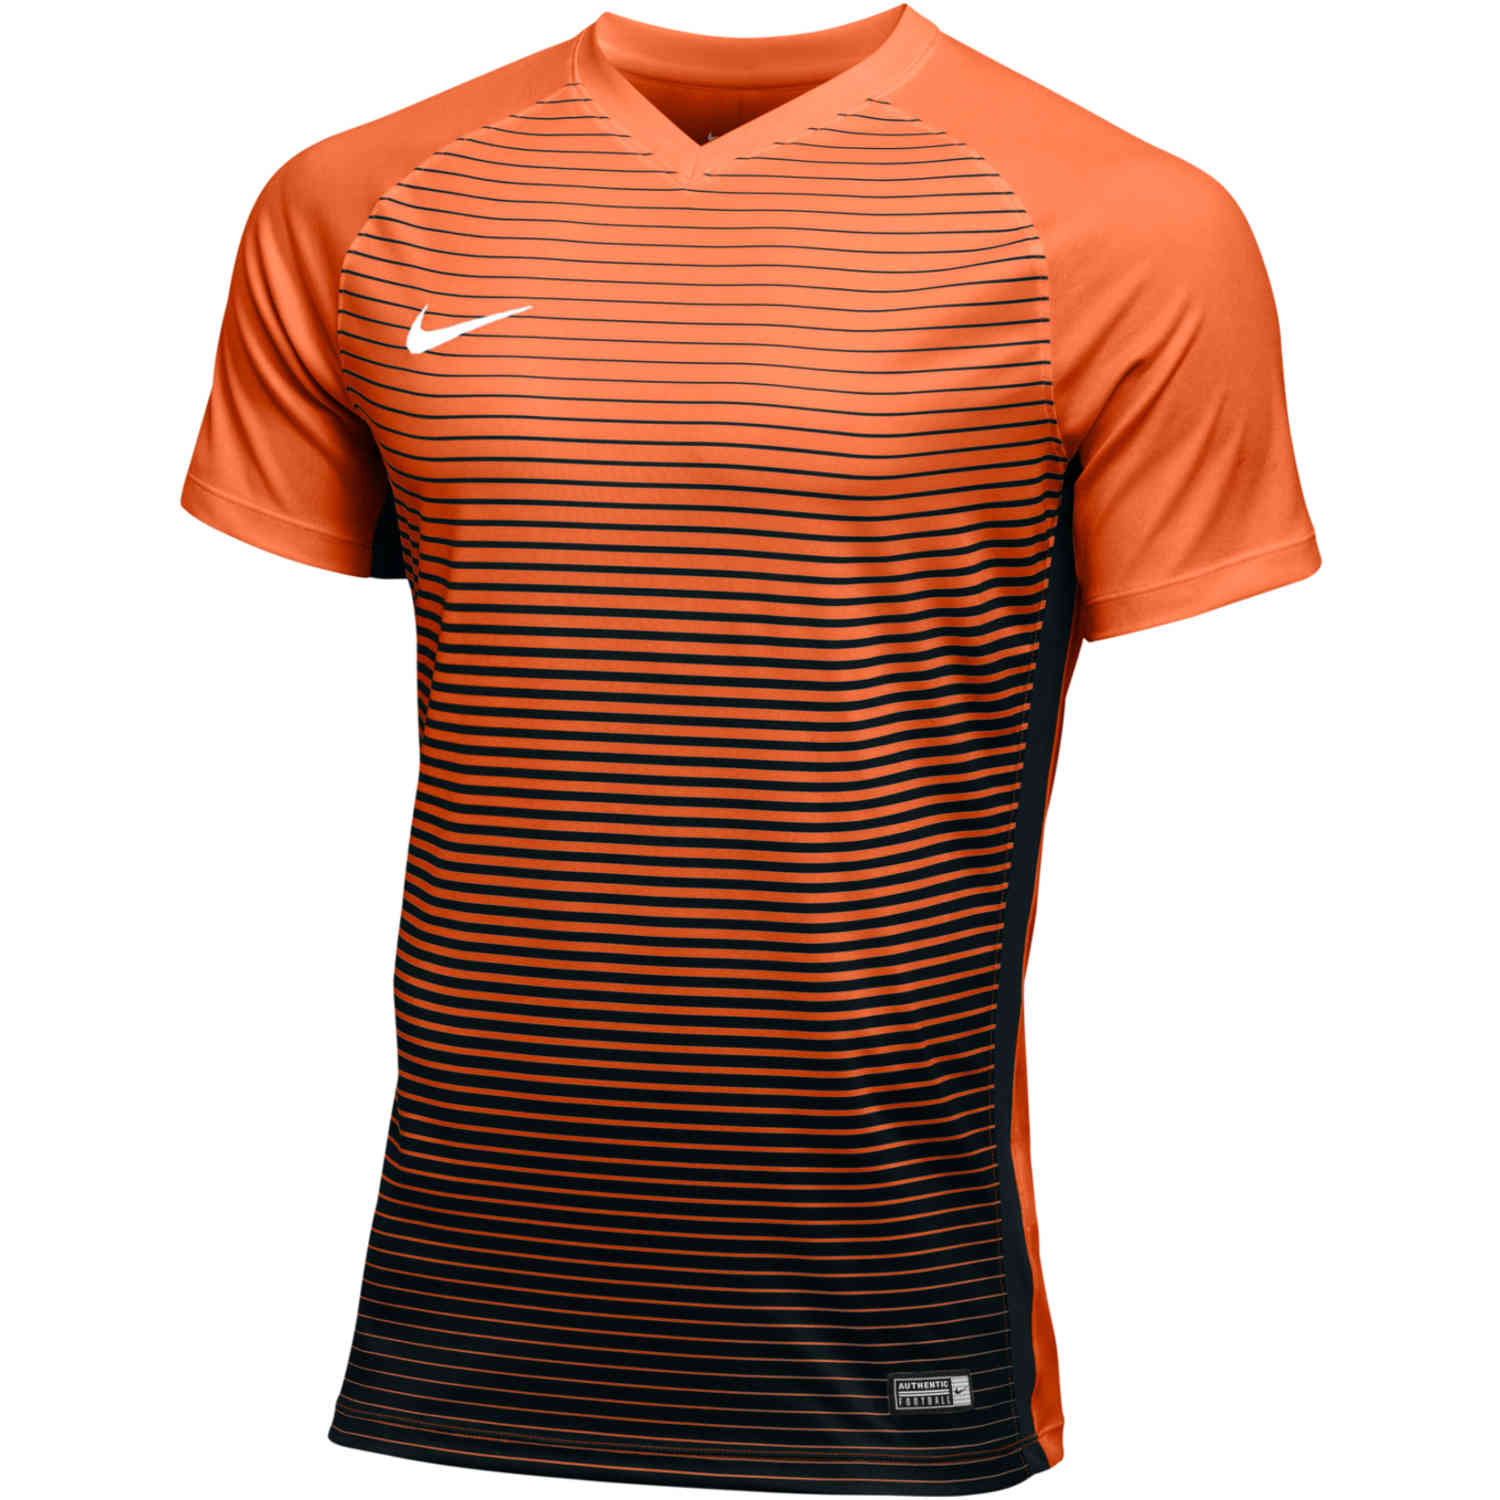 Nike Precision IV Jersey - Orange/Black 